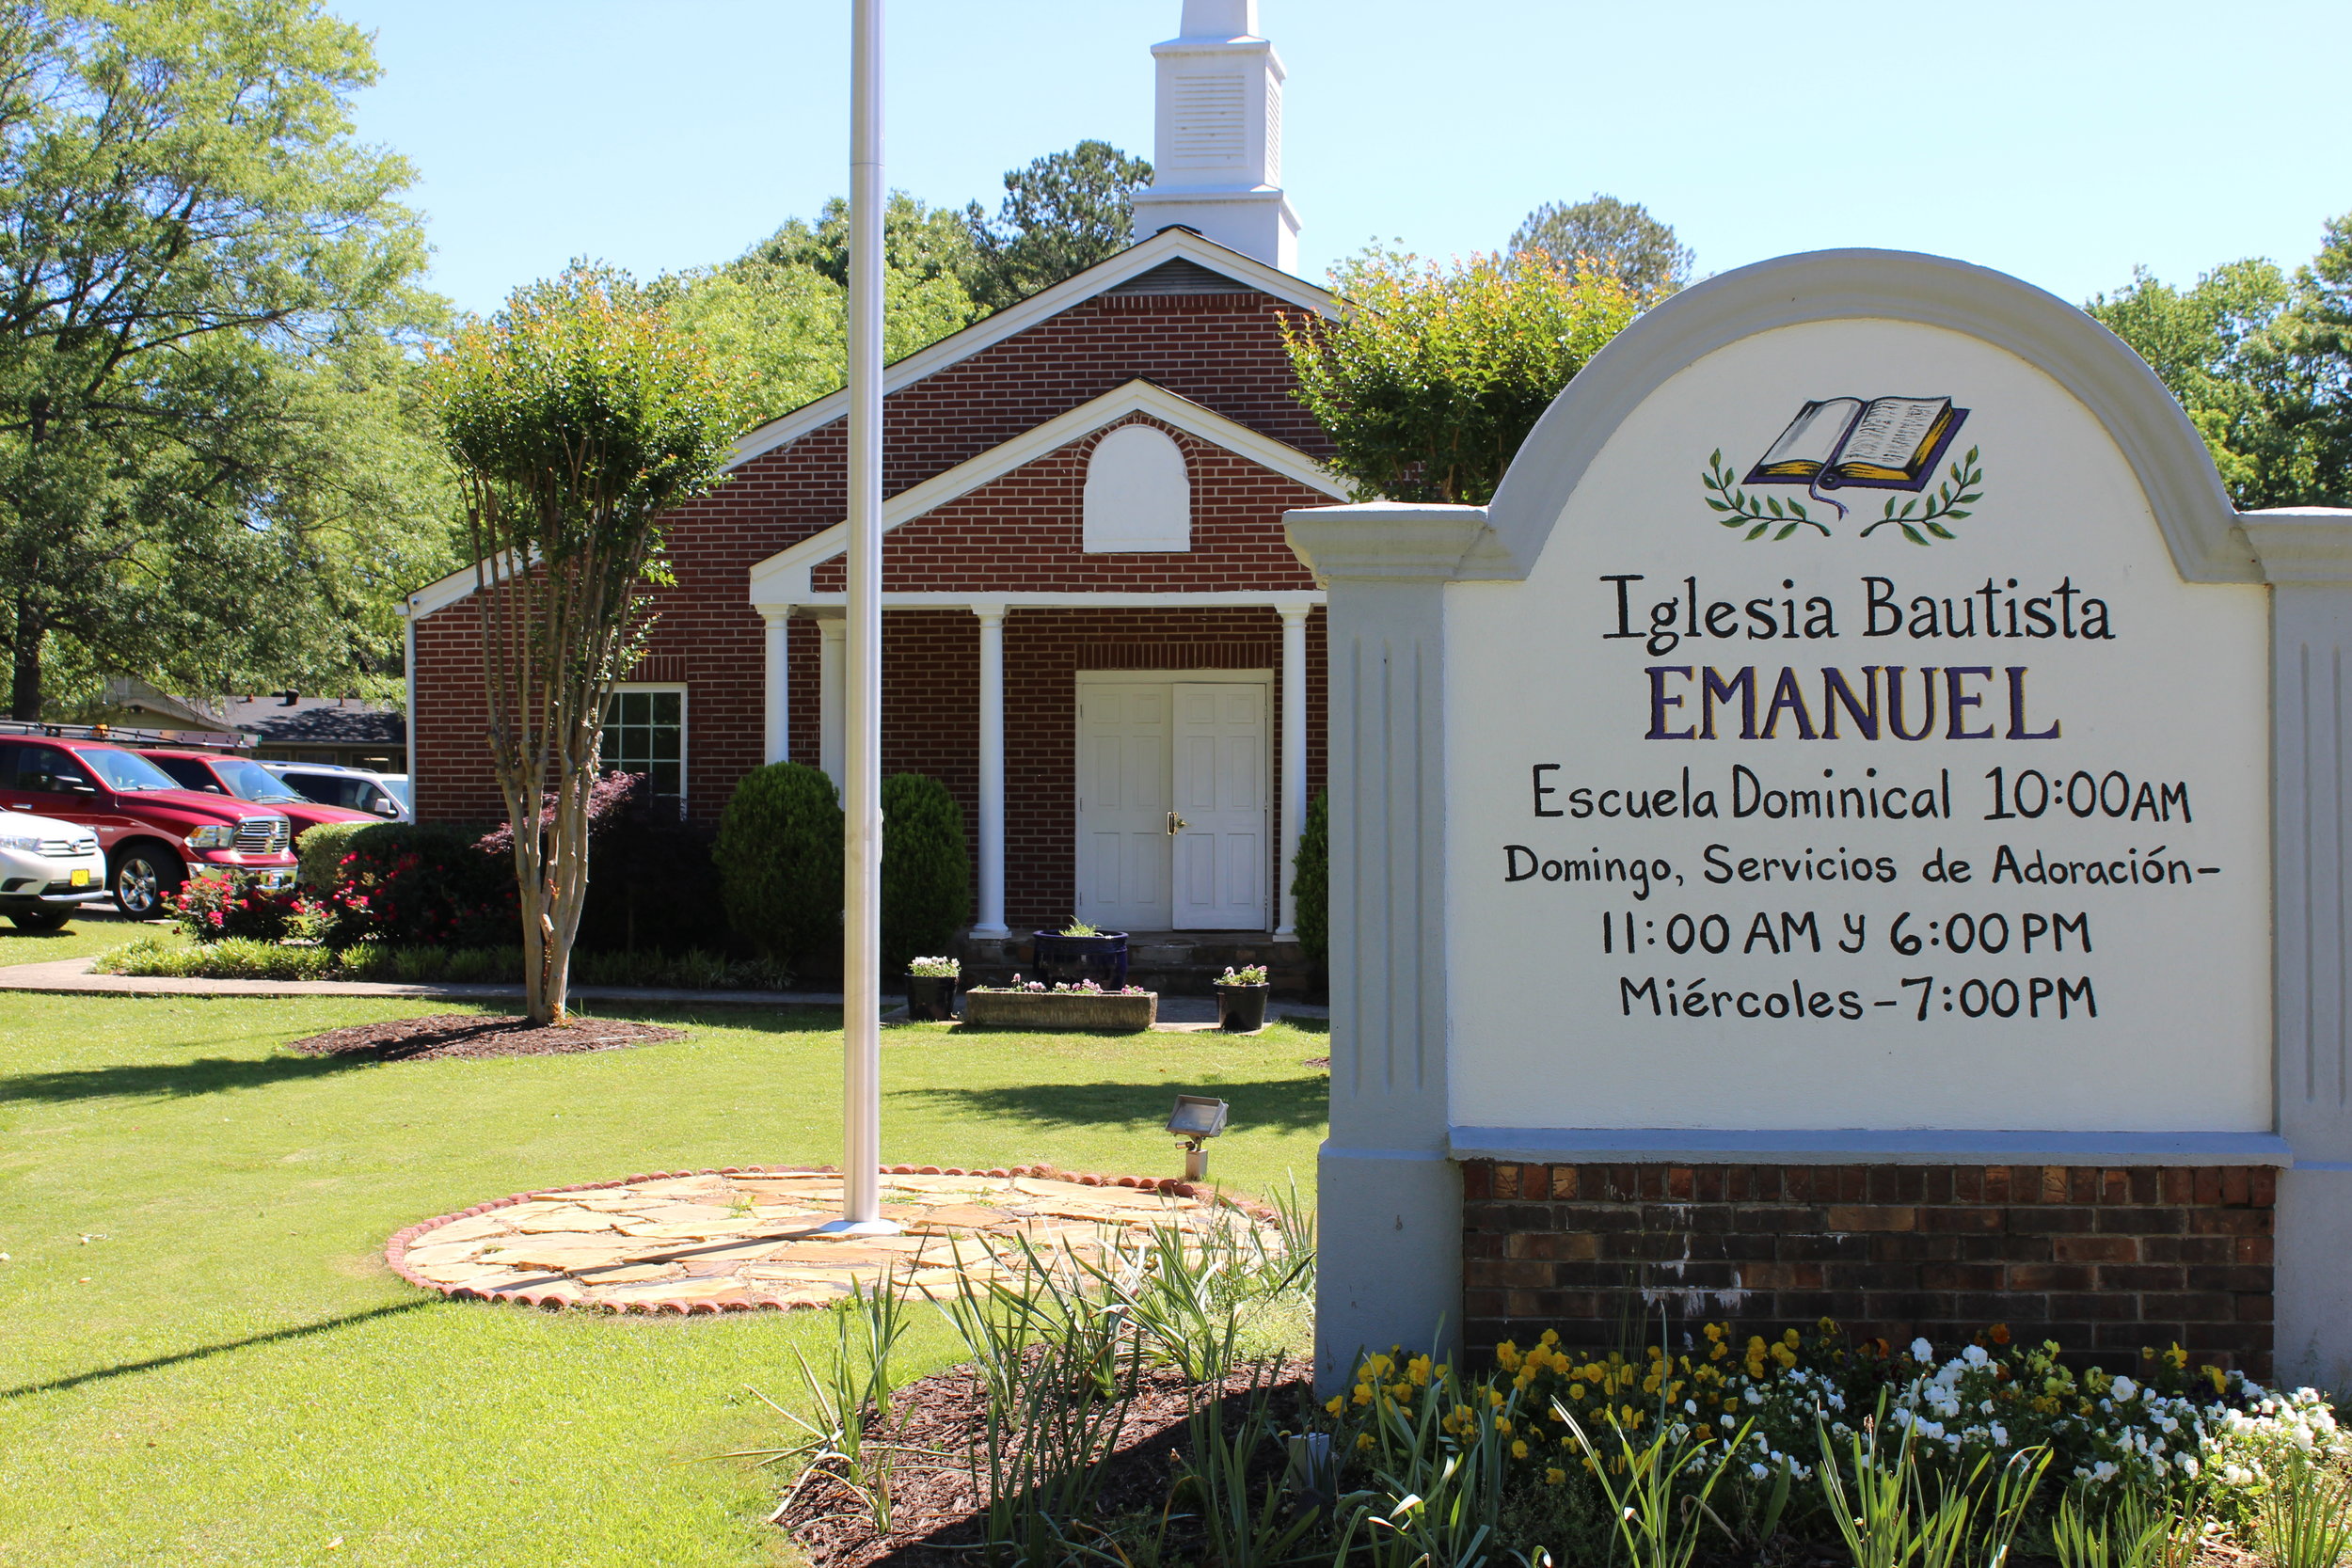 English — Iglesia Bautista Emanuel